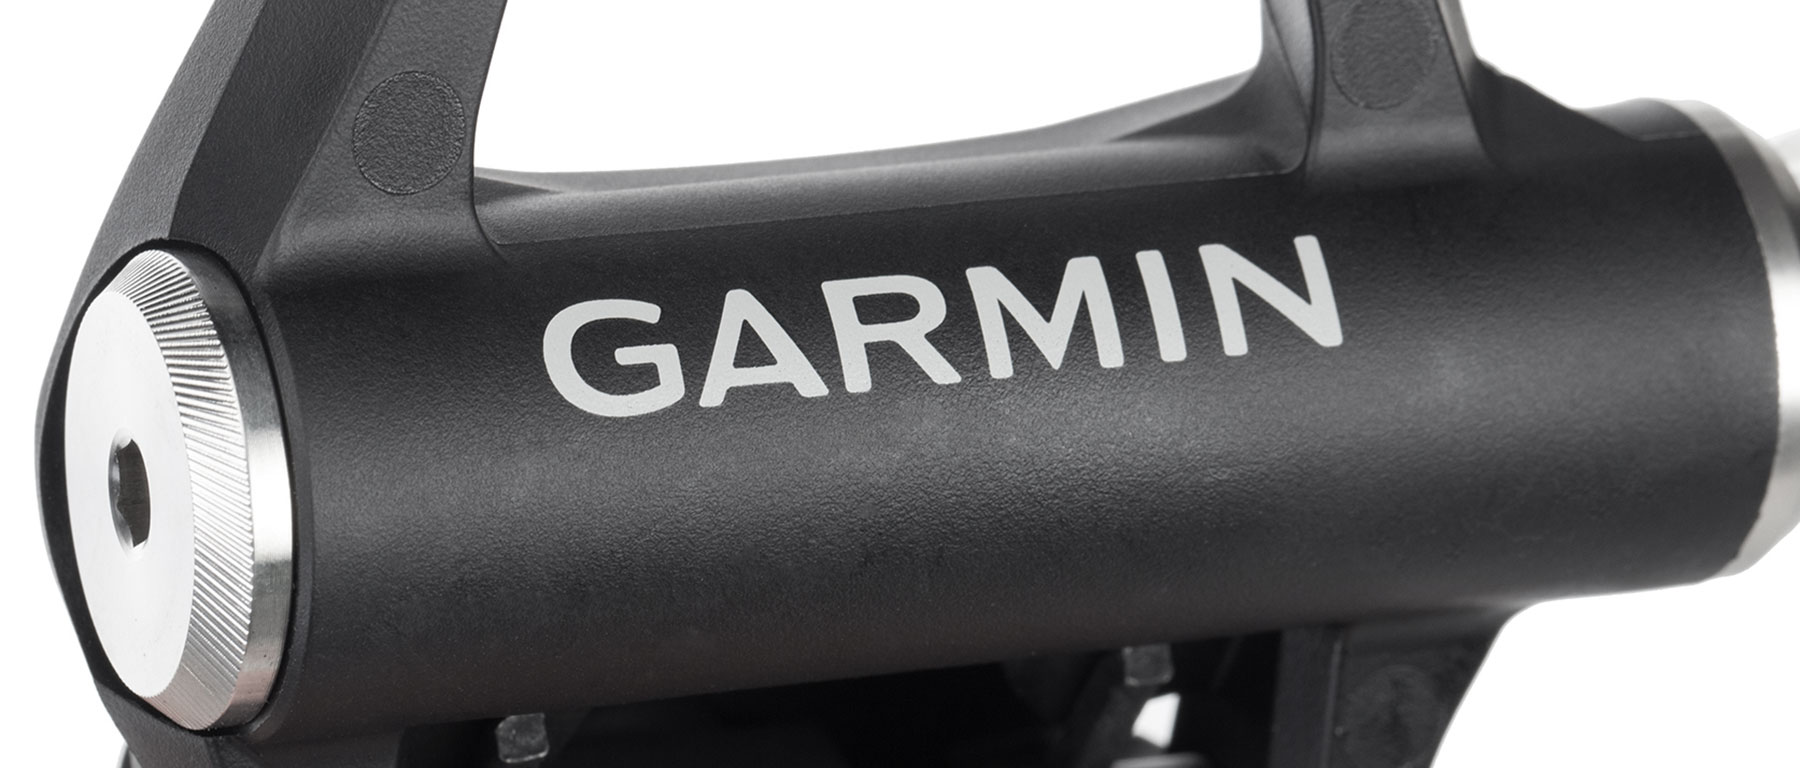 Garmin Vector 3S Single-sensing Power Meter Pedals - Demo